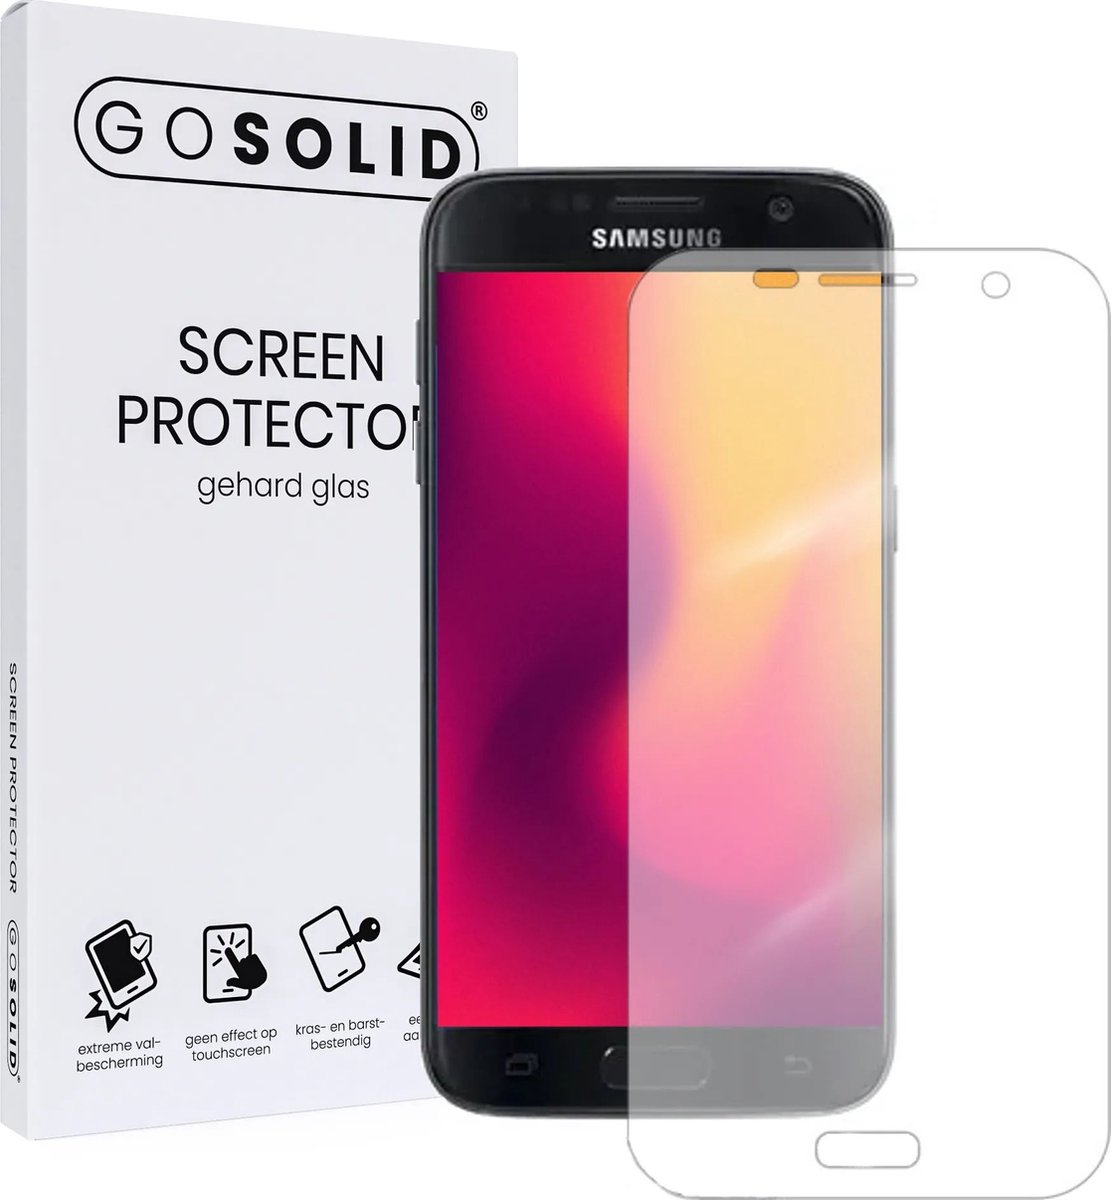 Go Solid! Samsung Galaxy S4 Screenprotector Gehard Glas